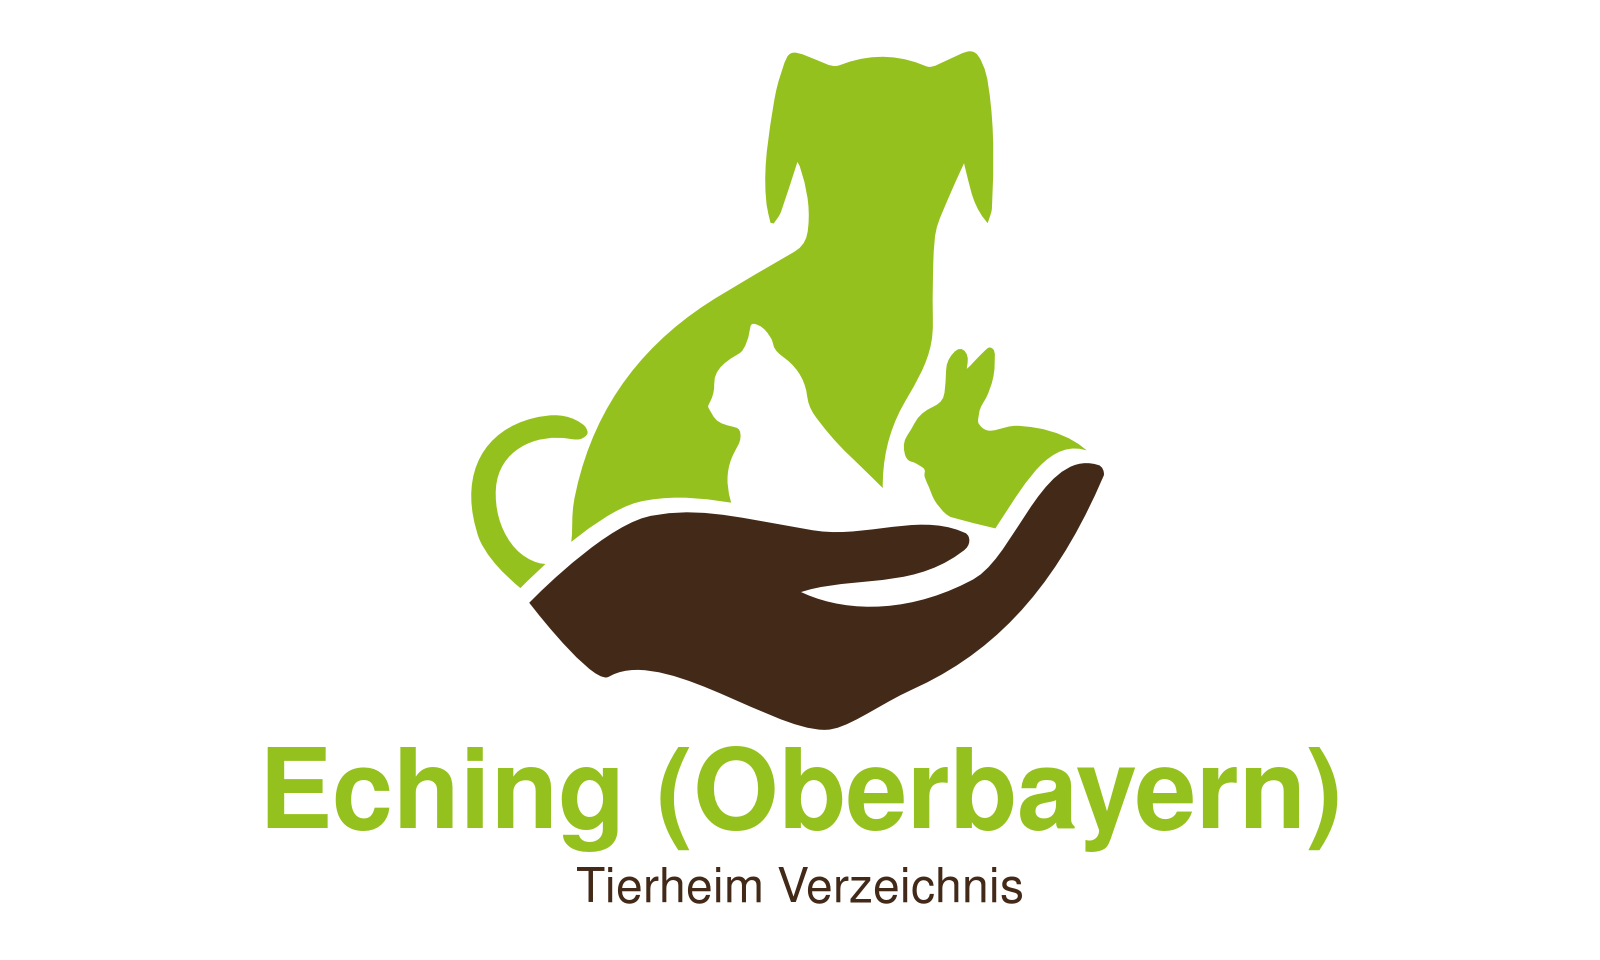 Tierheim Eching (Oberbayern)